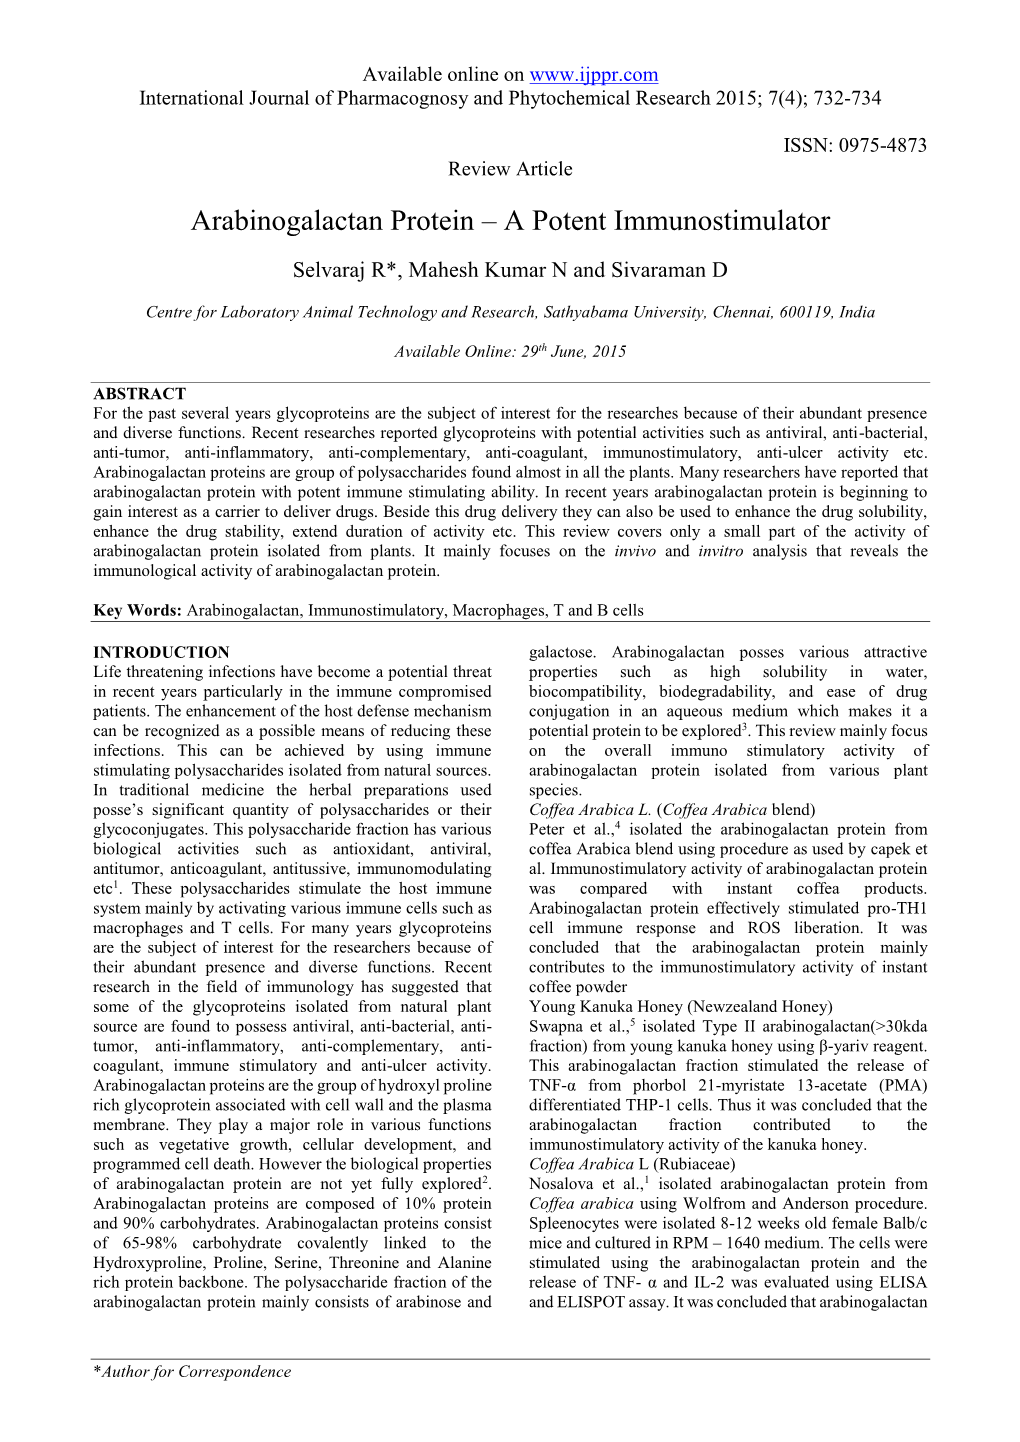 Arabinogalactan Protein – a Potent Immunostimulator